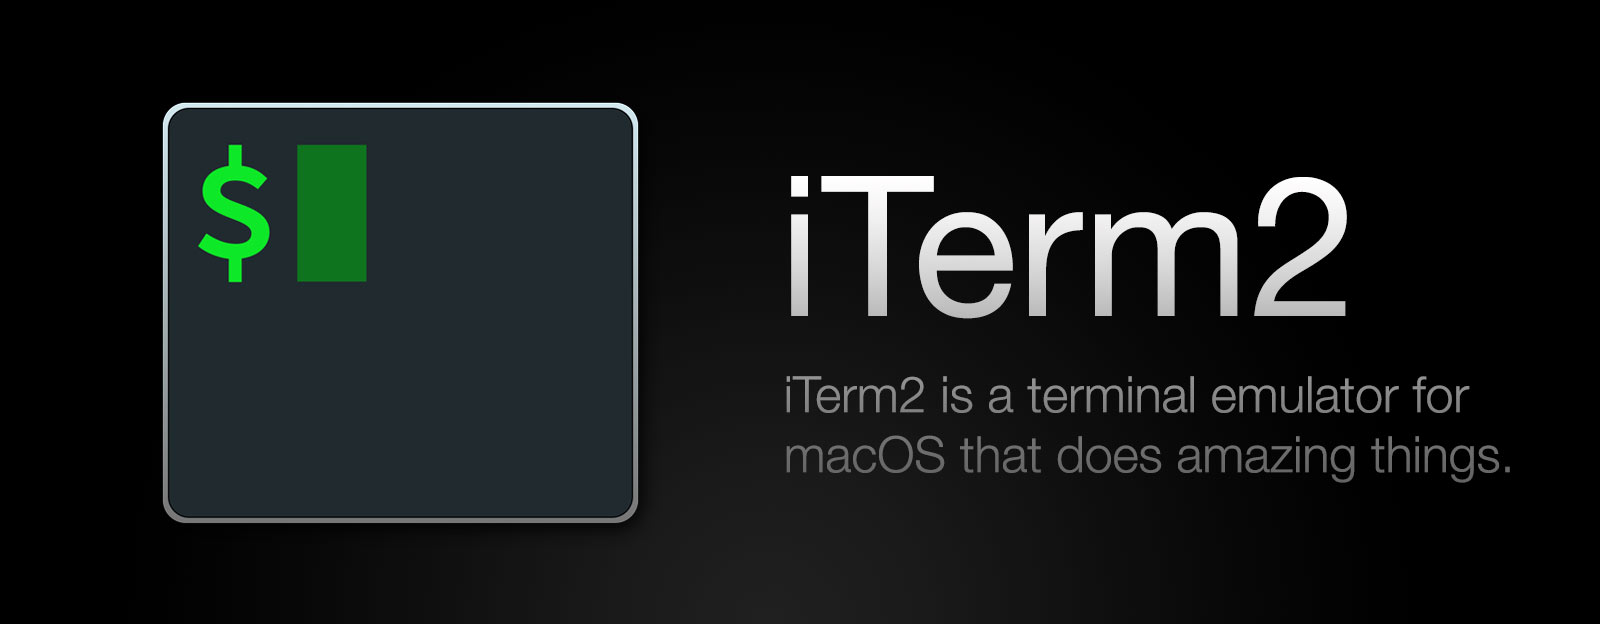 iterm2 windows terminal